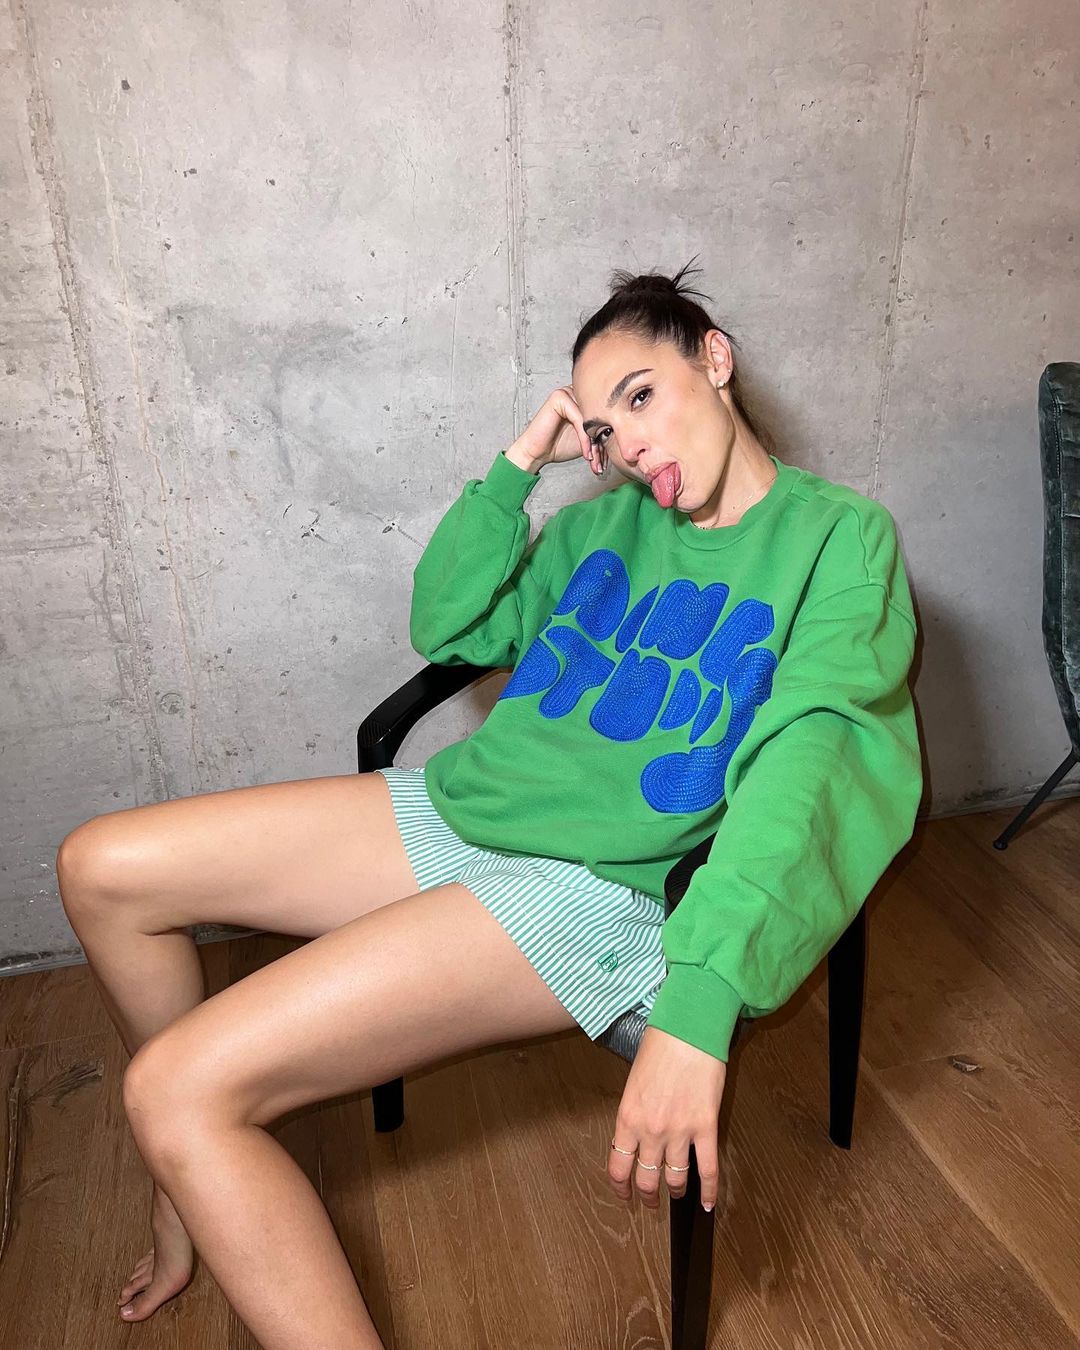 Gal Gadot flaunts her toned legs and wears Green Sweat Shirt Photos, Nov 2022